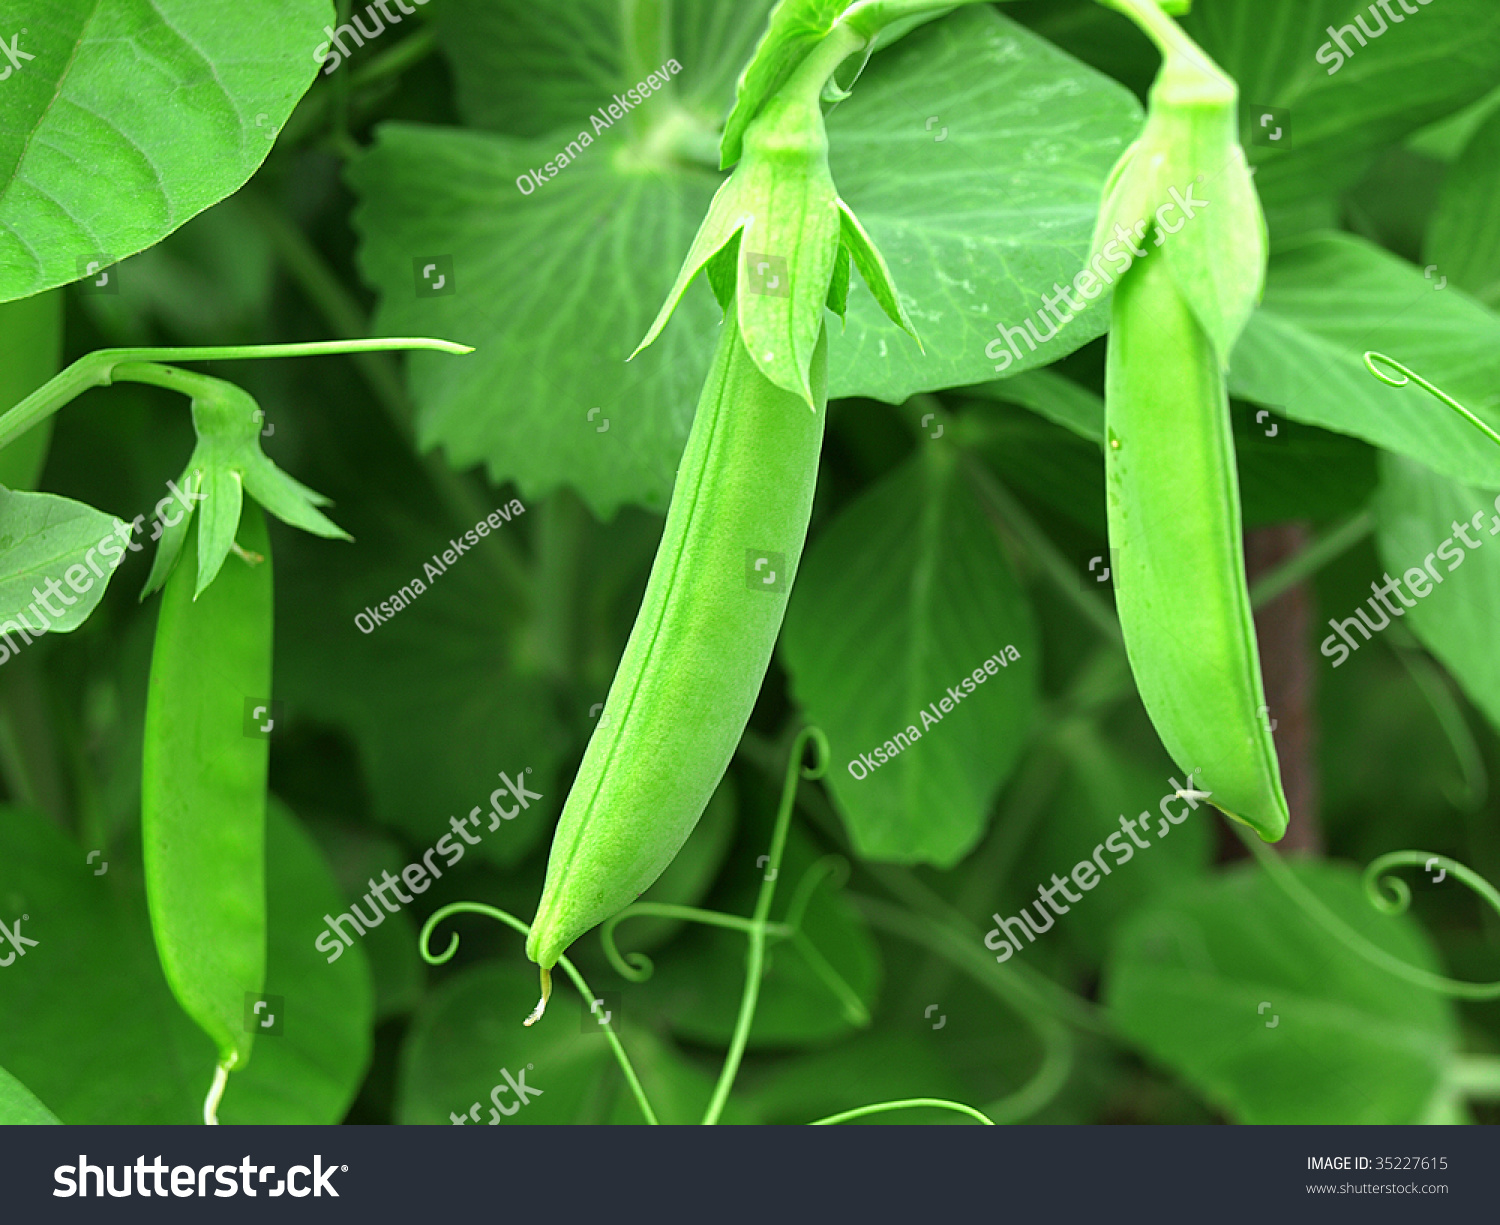 Plant Vegetable Pea Green Stock Photo 35227615 : Shutterstock